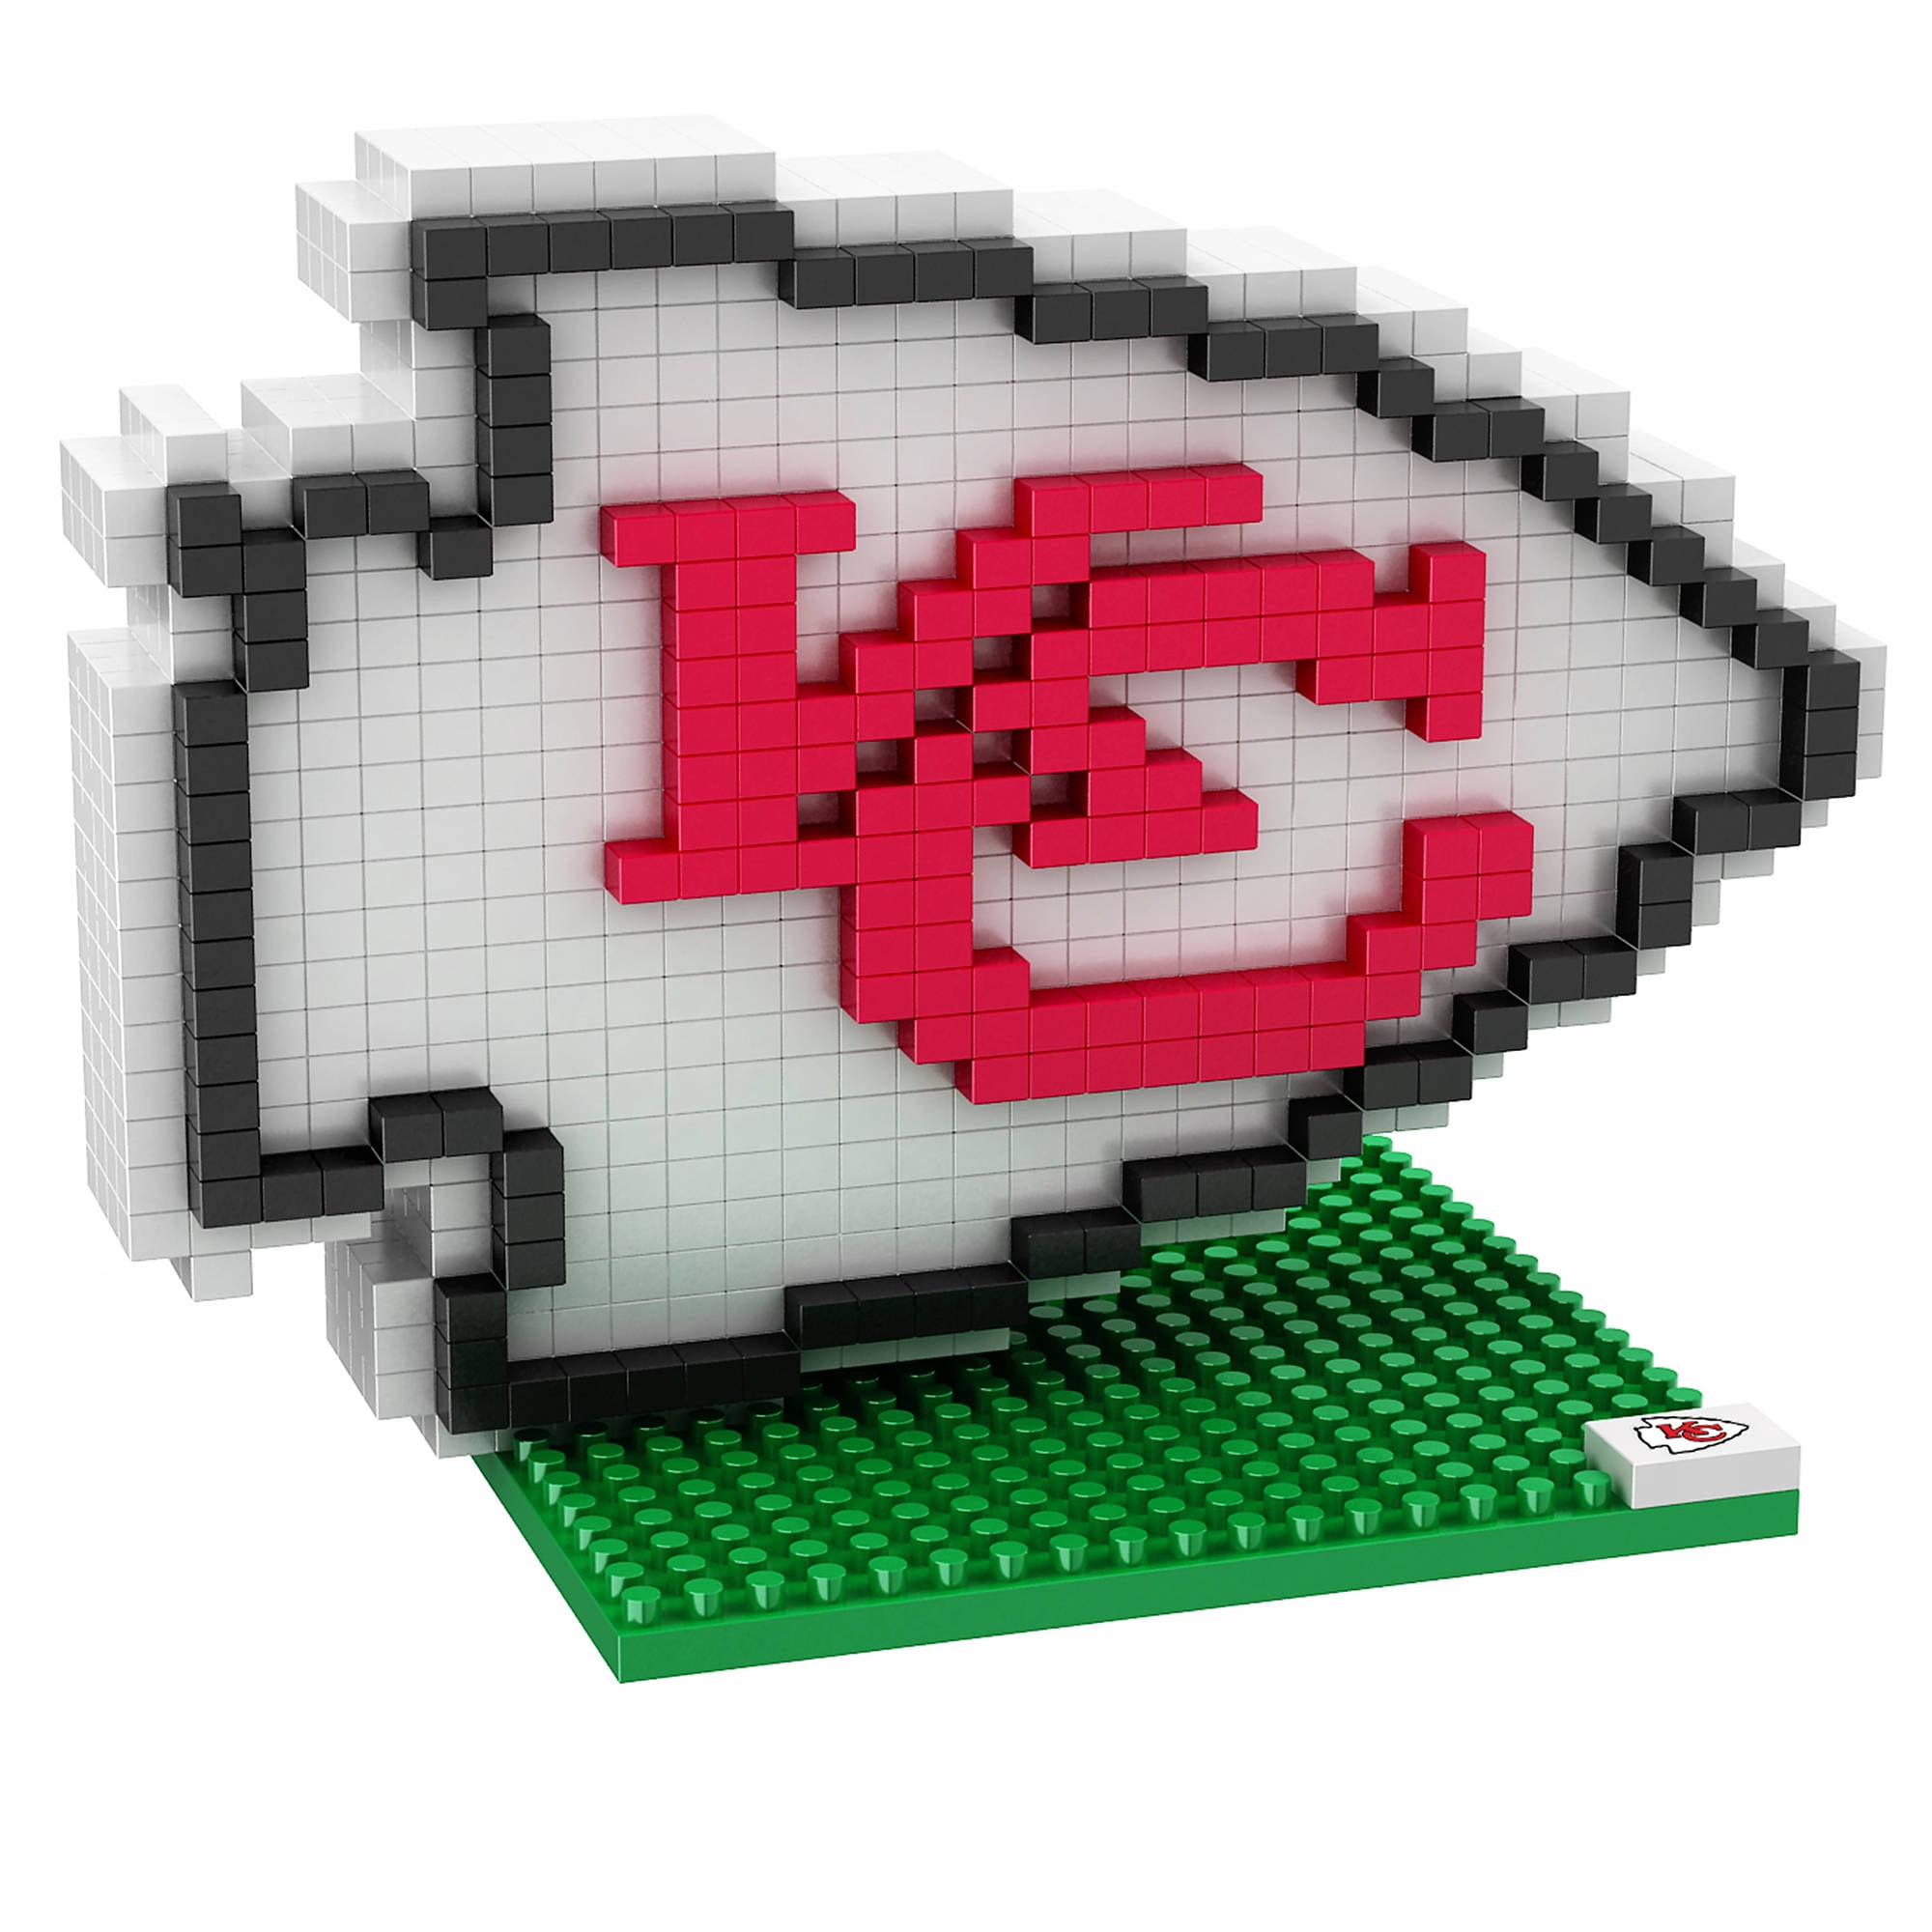 Carolina Panthers Logo 3D BRXLZ Buildink Kit 317 Piece